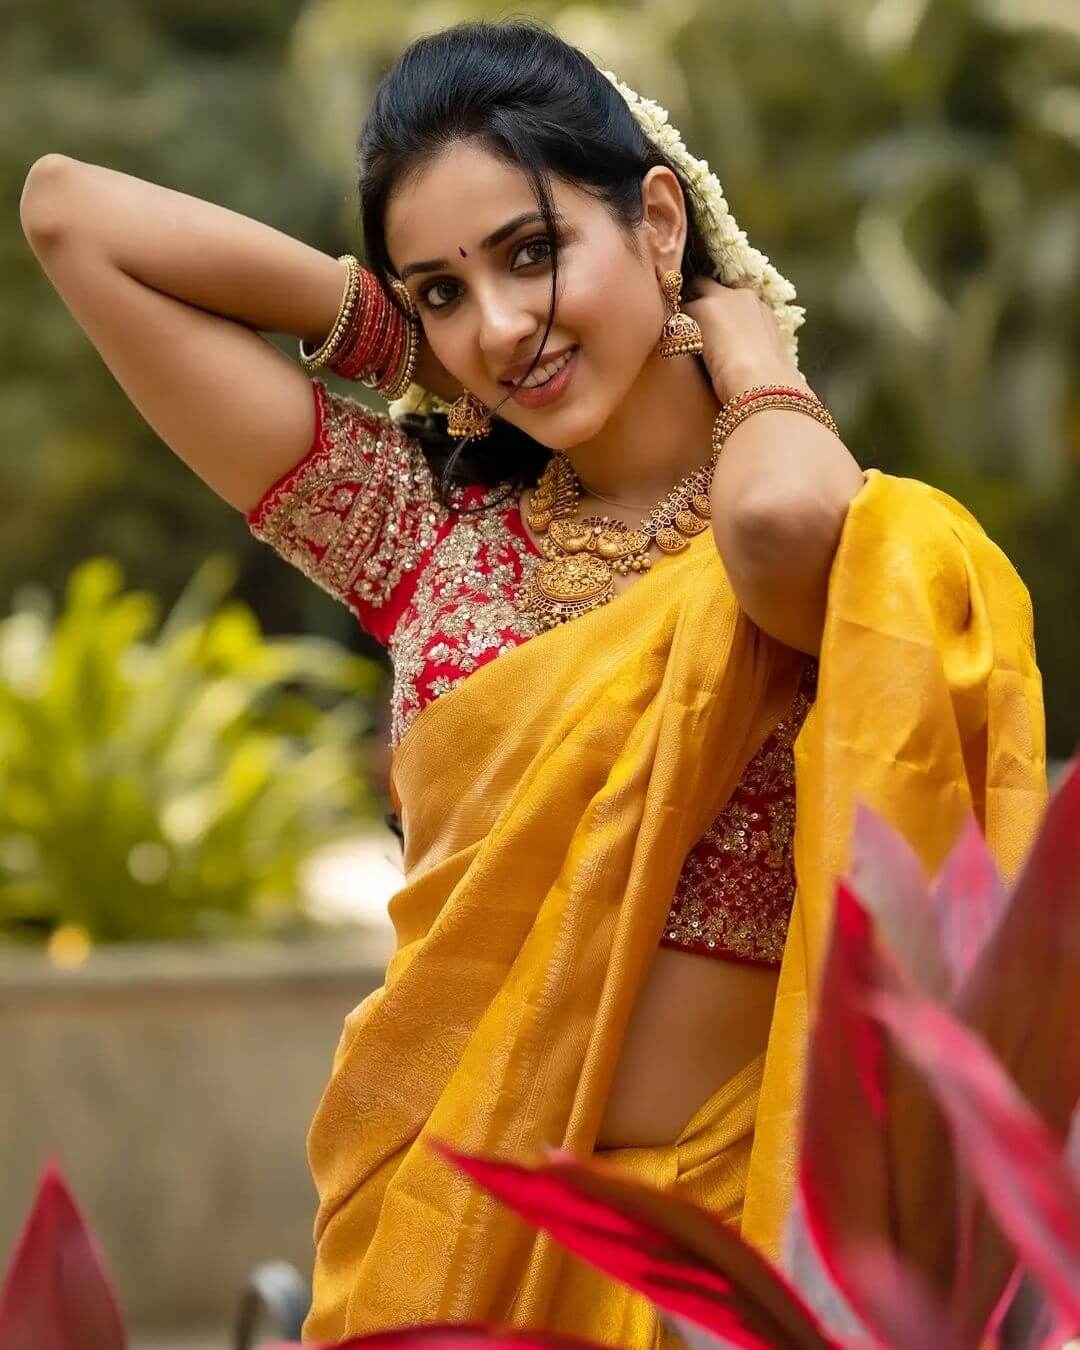 Riya Suman Festive Ready Look In Yellow Saree With Embellishing Red Blouse